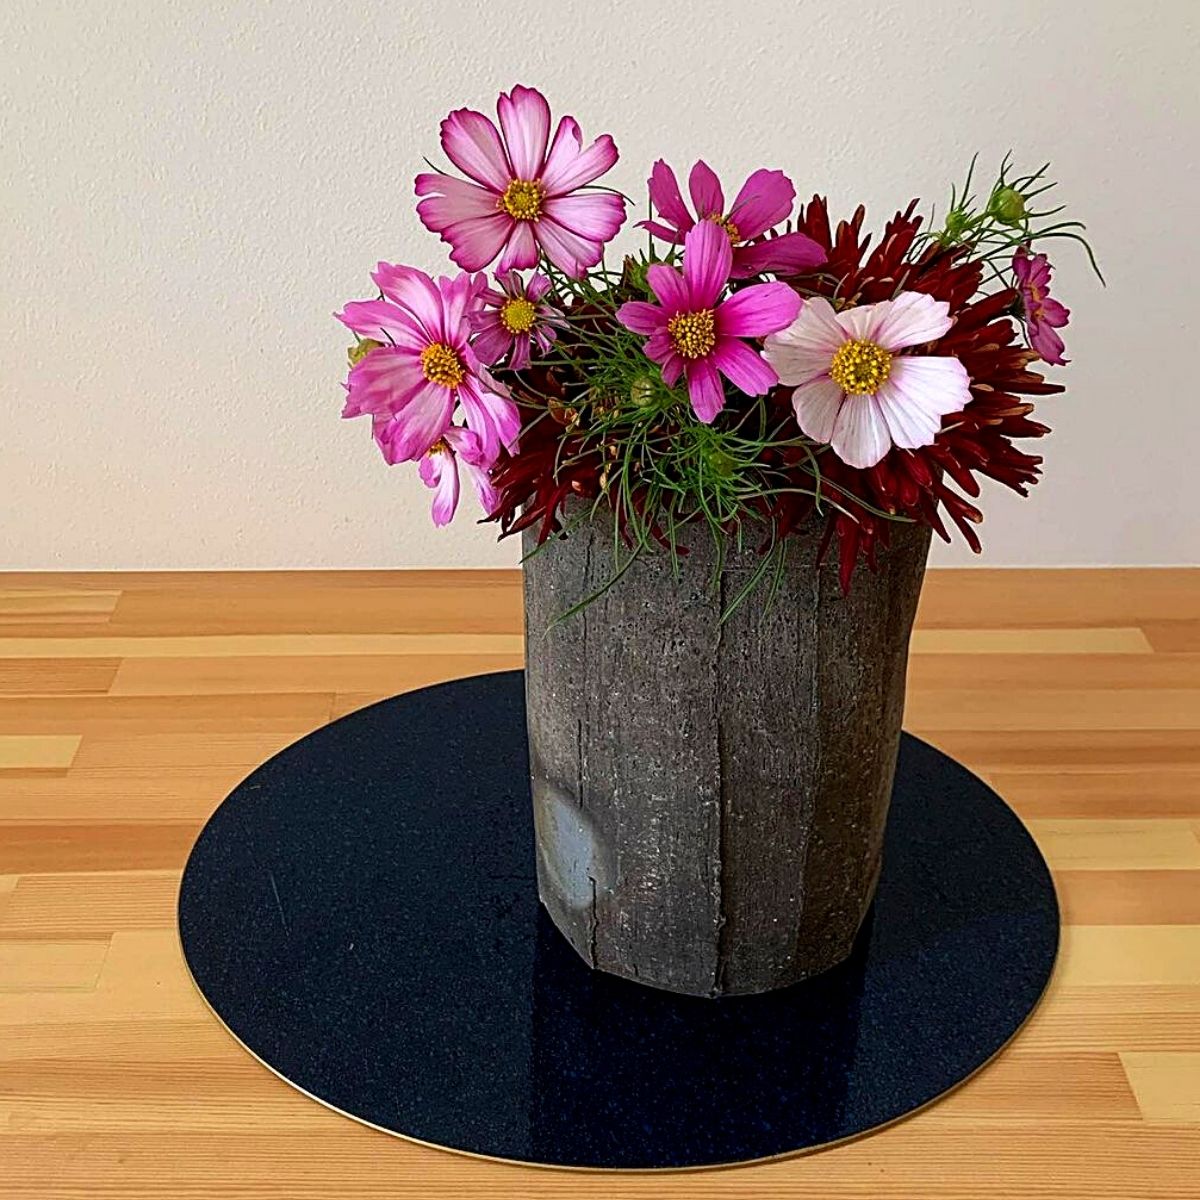 Nageirebana Art of Floral Arrangement 